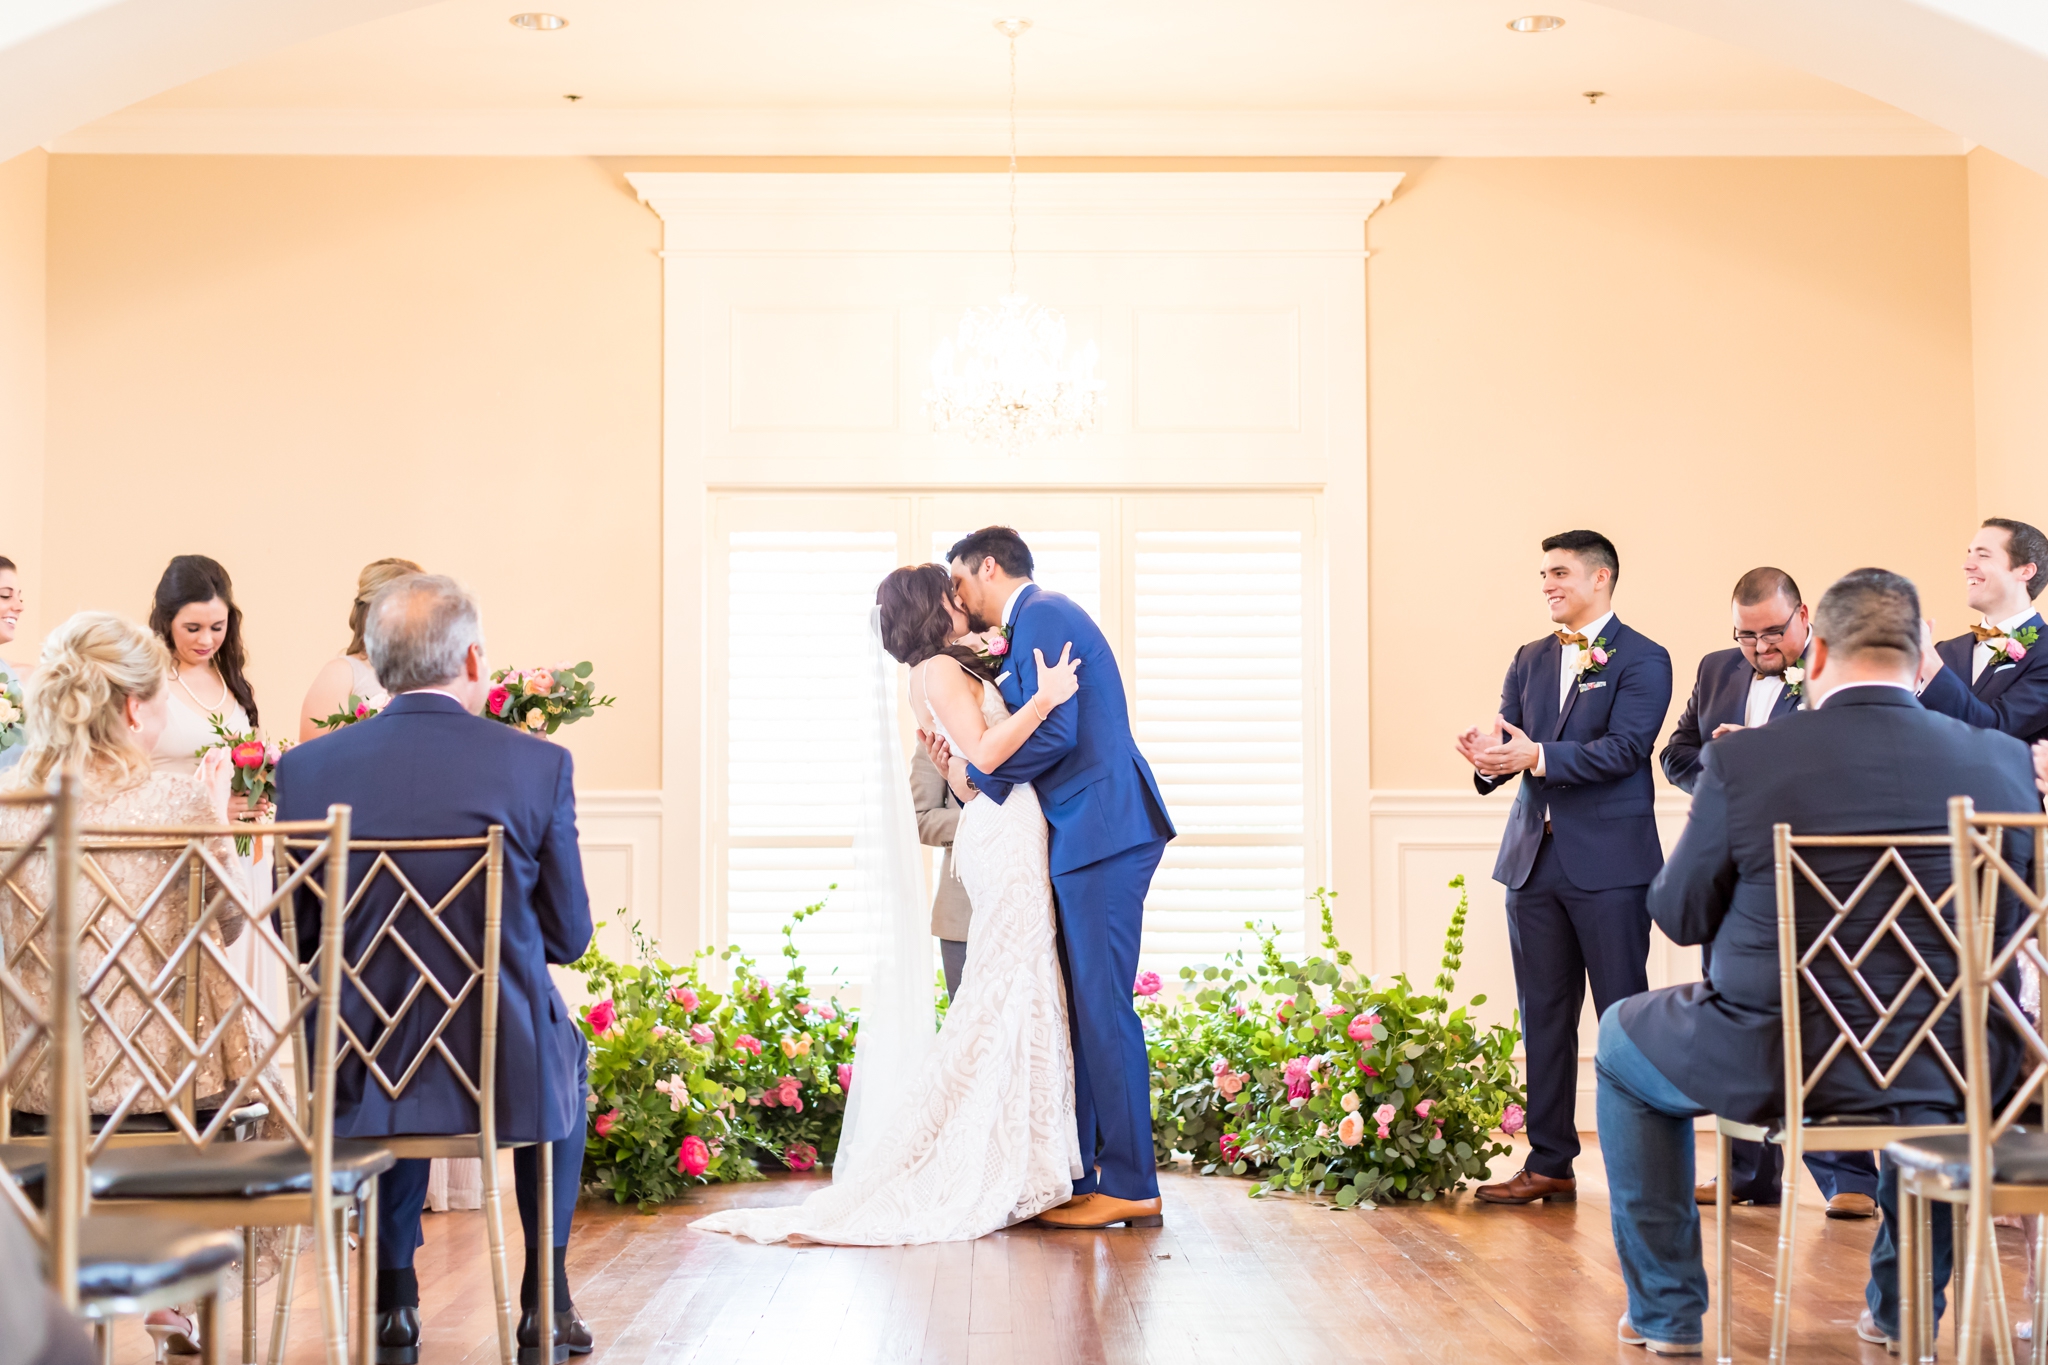 A Powder Blue, Blush and Hot Pink wedding at Milltown Historic District in New Braunfels, TX by Dawn Elizabeth Studios, San Antonio Wedding Photographer